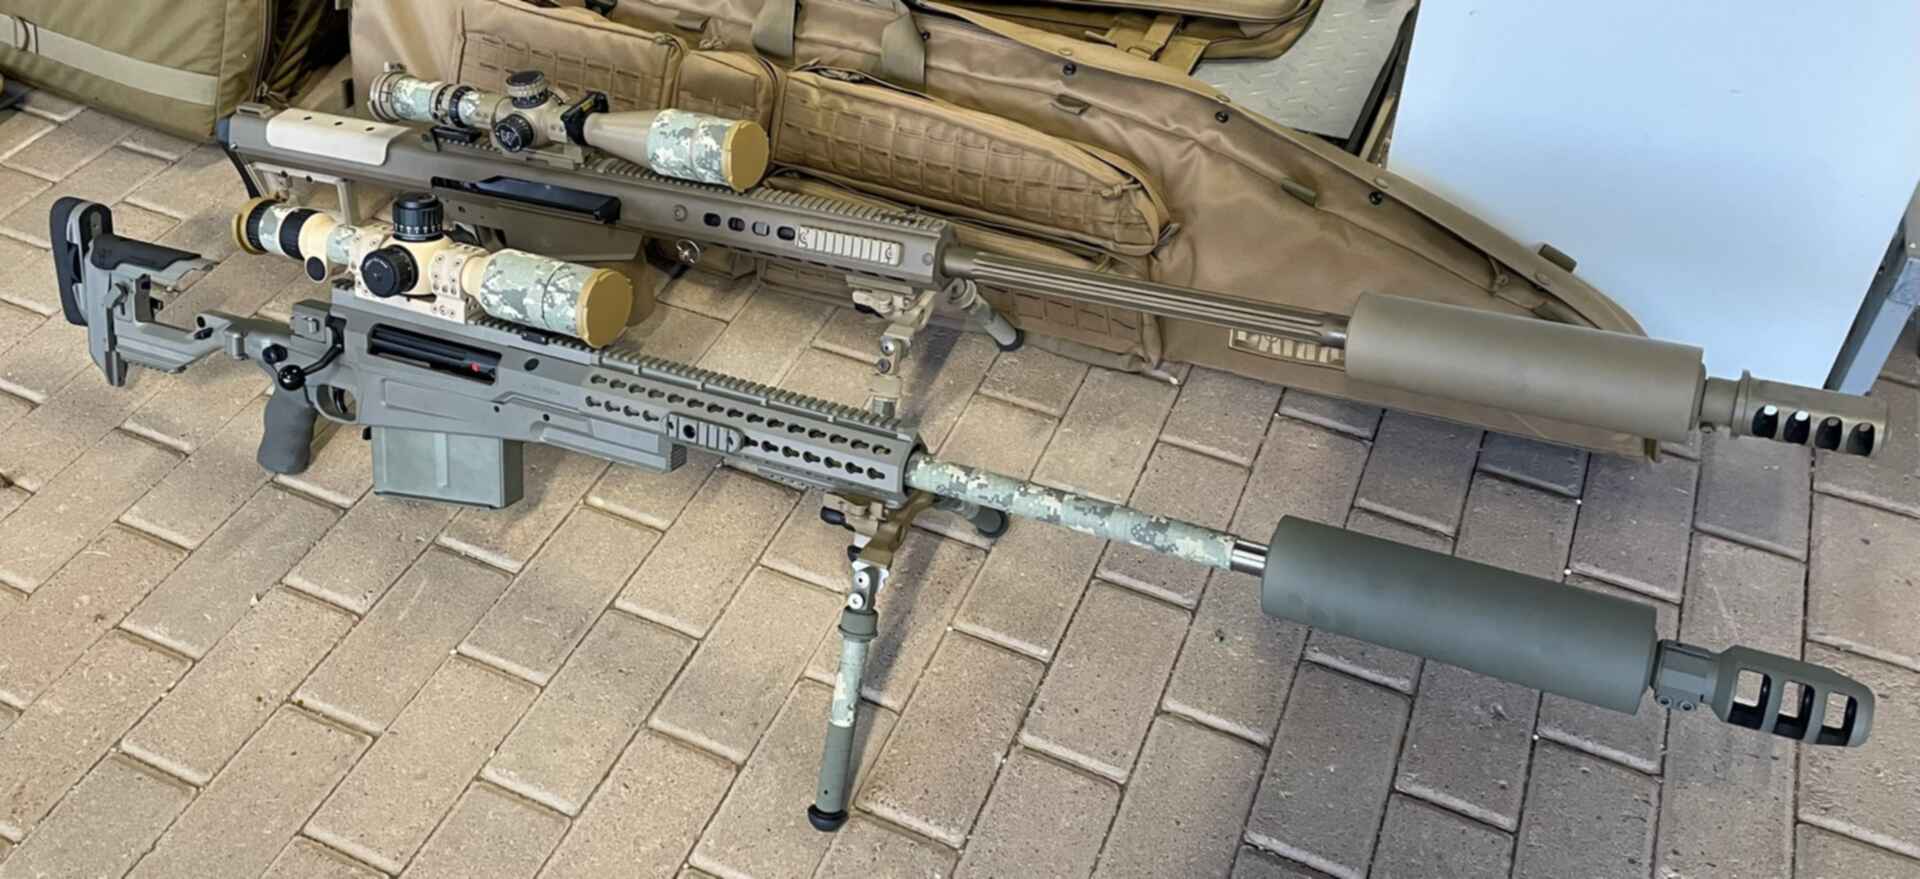 Fallout 4 accuracy international ax50 anti materiel rifle фото 59